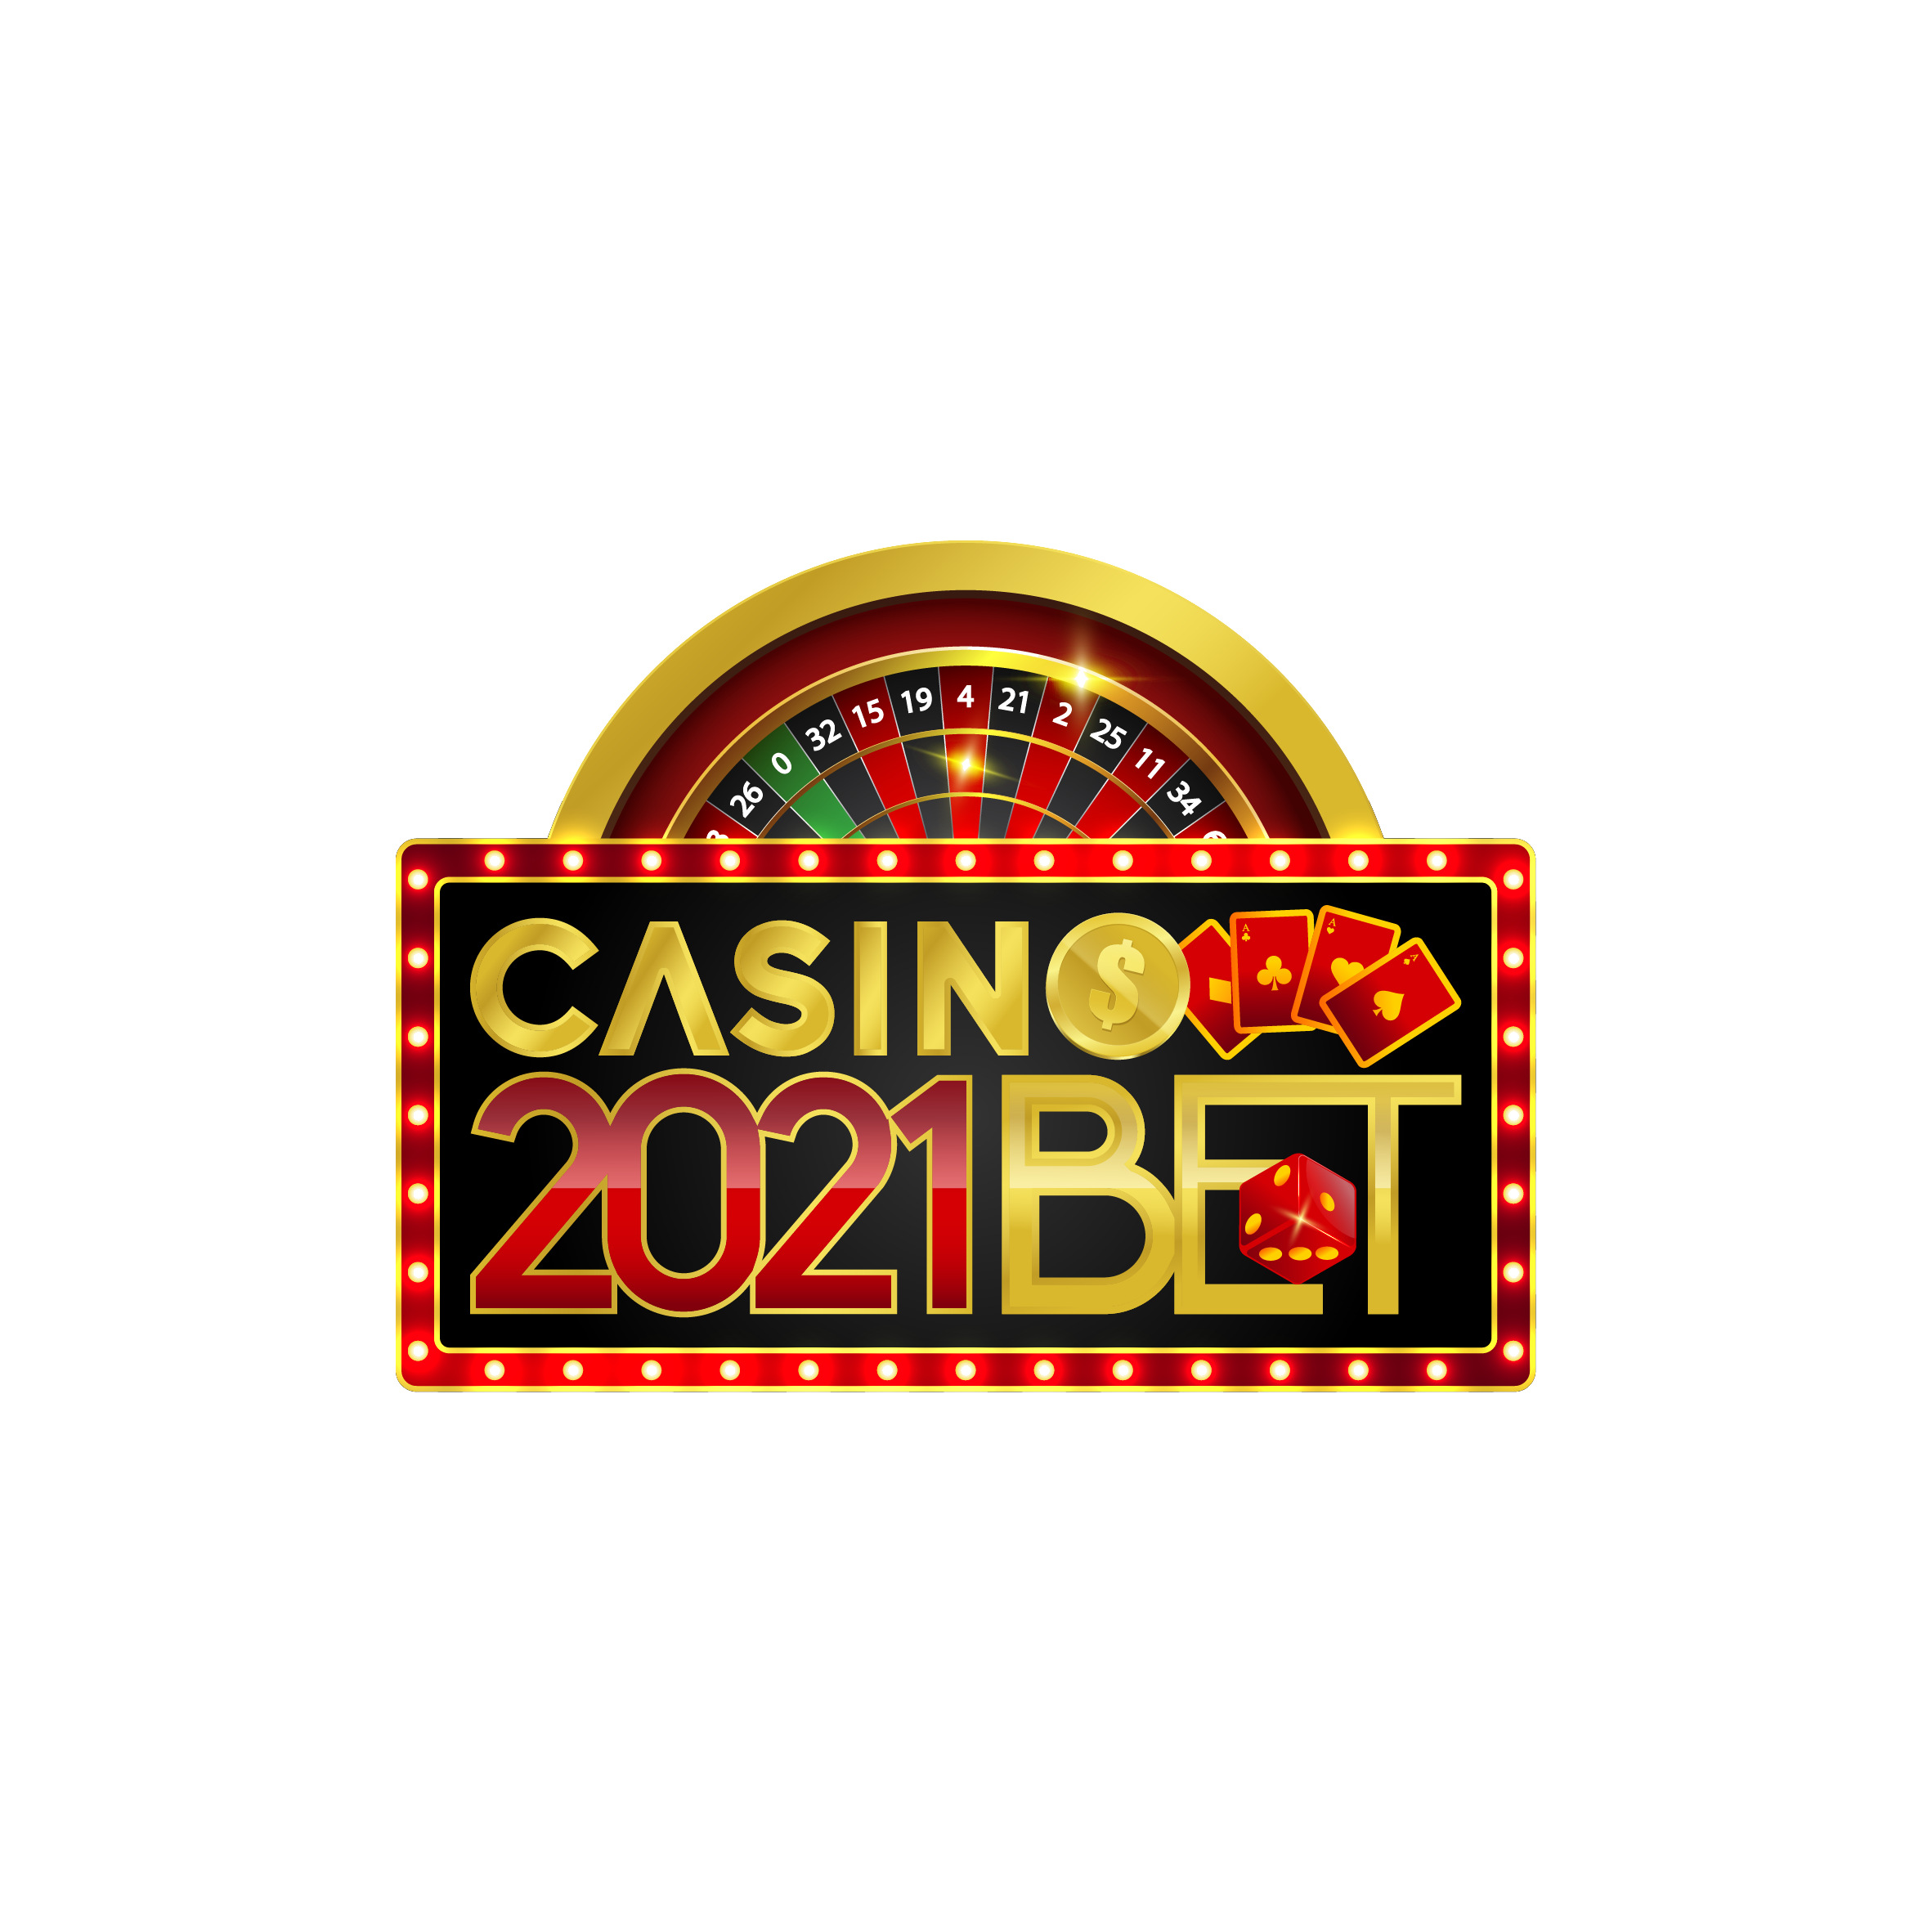 Casino2021bet Review